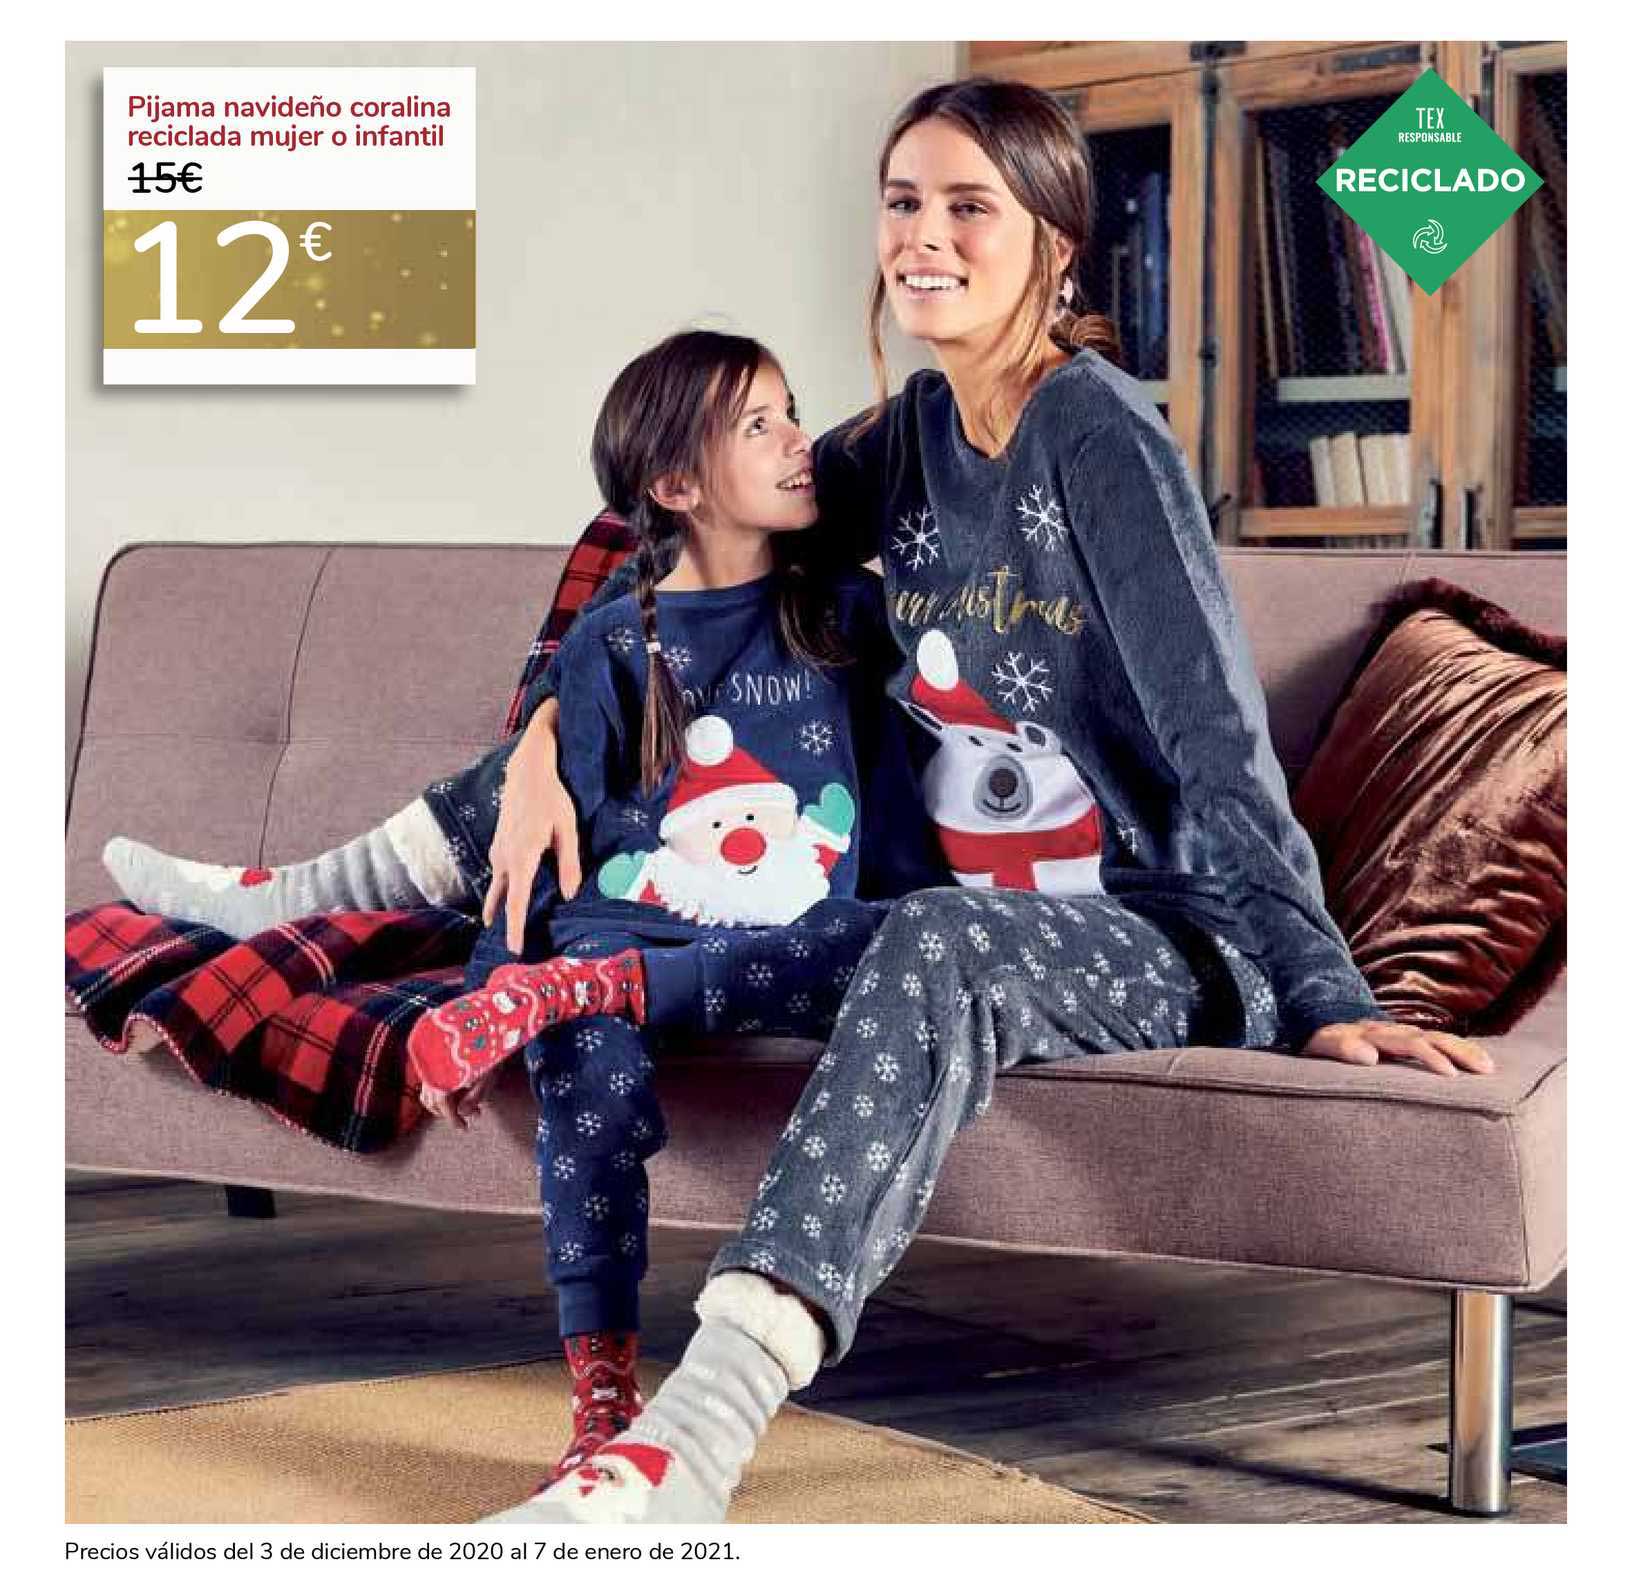 Pijama Navideño Reciclada Mujer O Infantil en Carrefour